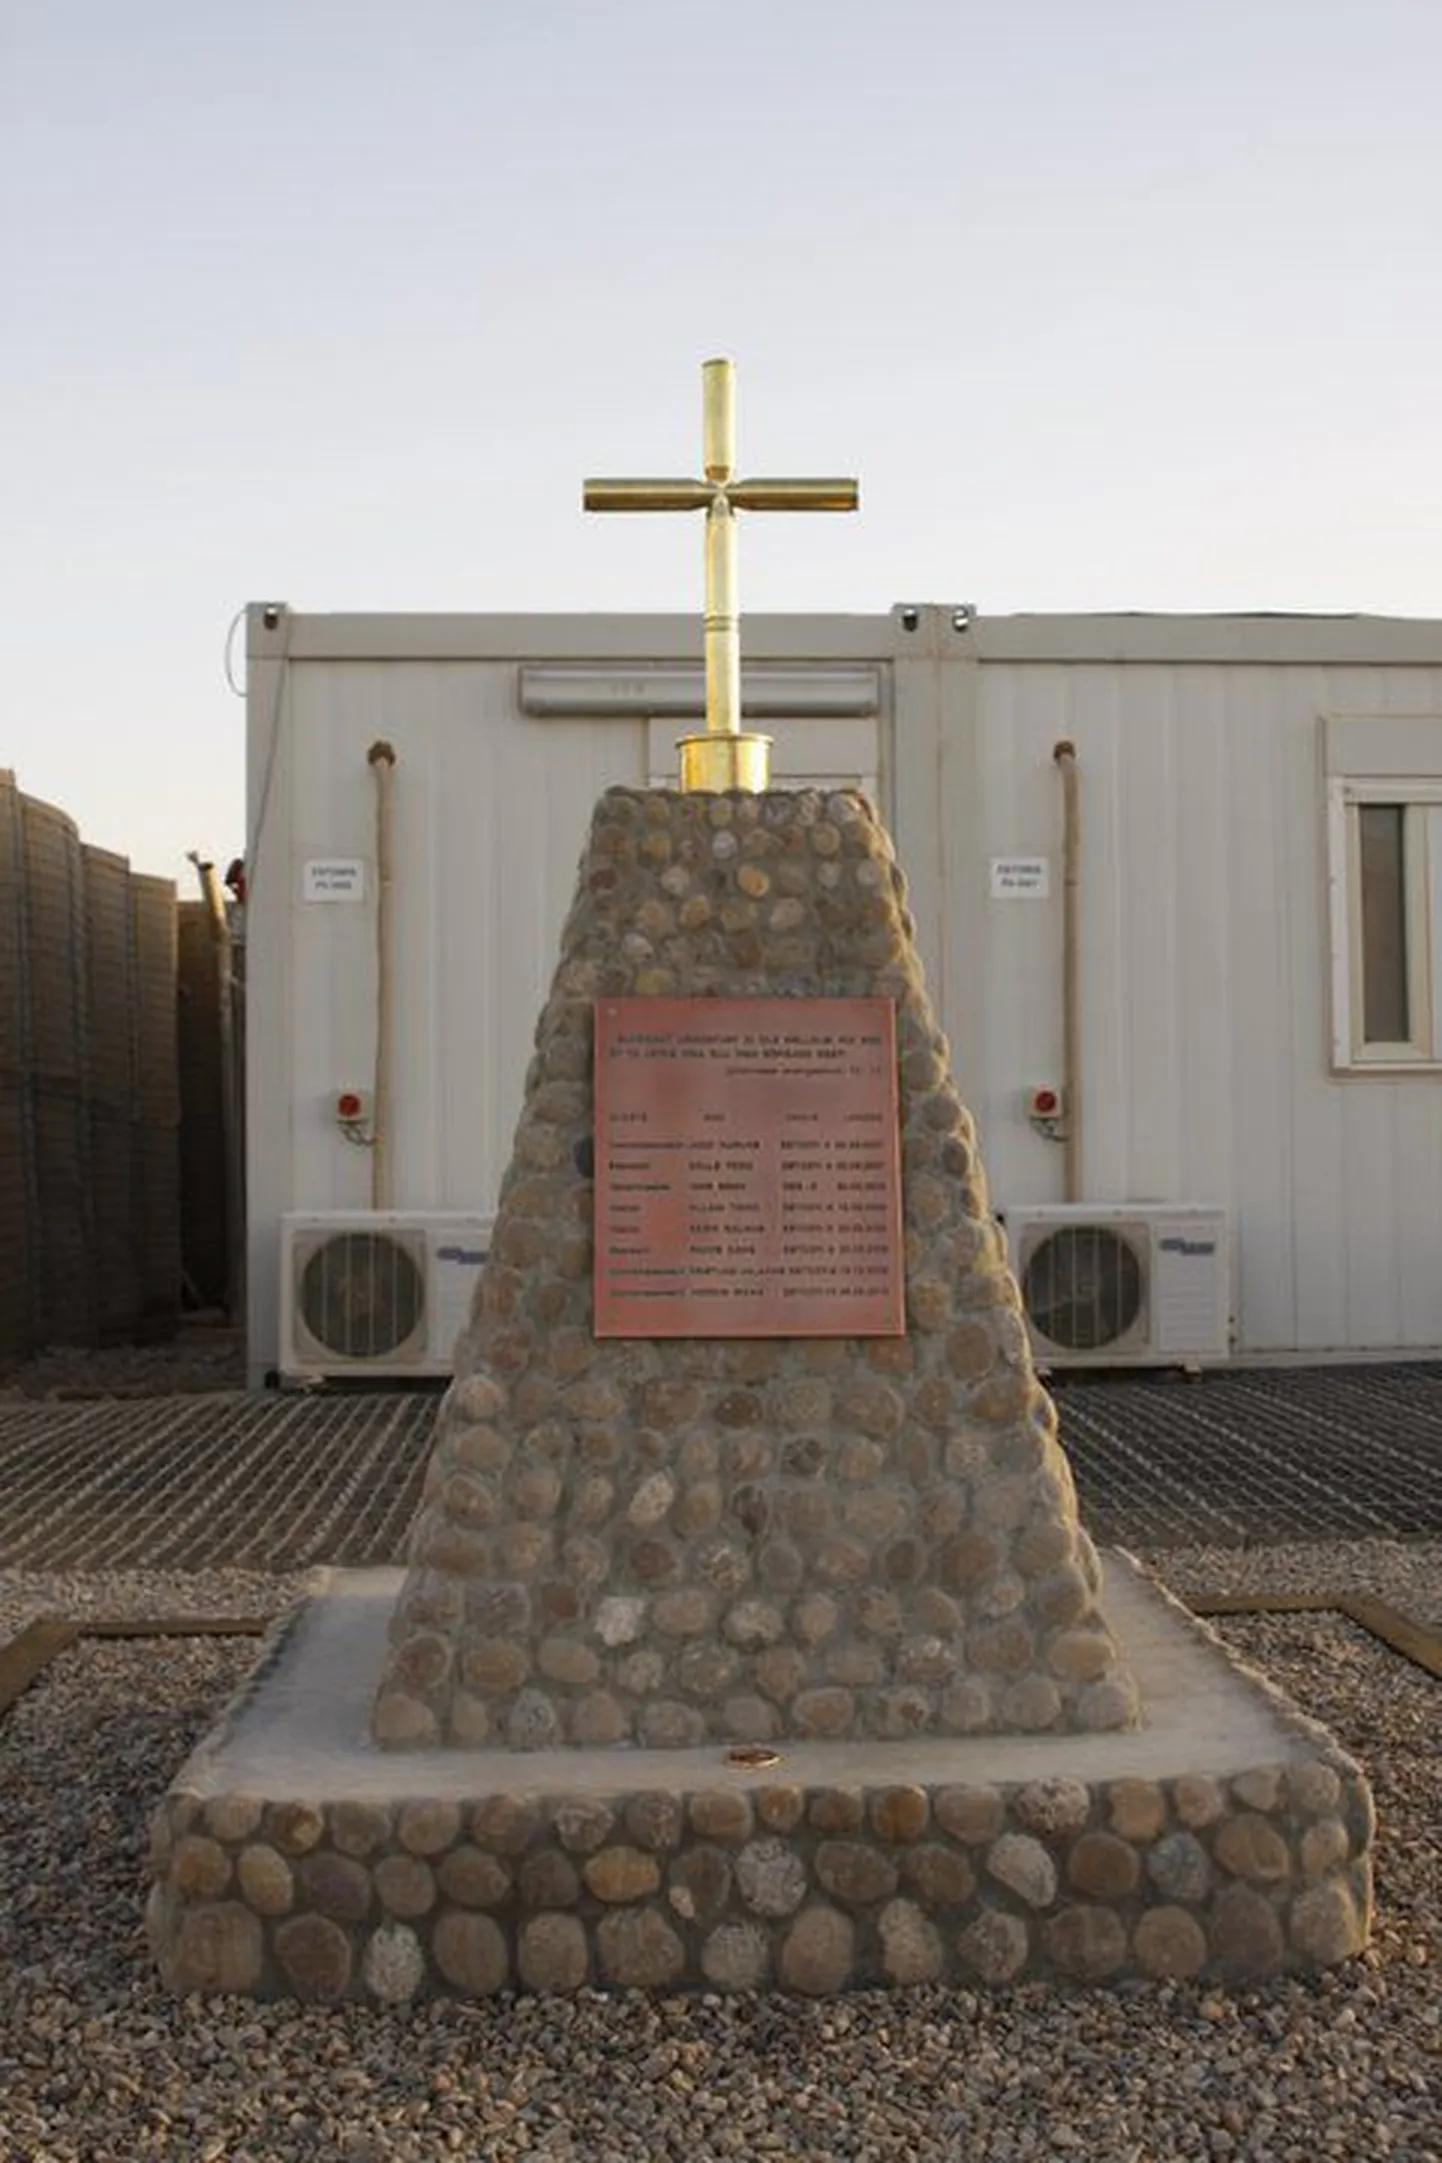 Памятник эстонским бойцам, погибшим в Афганистане, установлен на базе Camp Bastion.